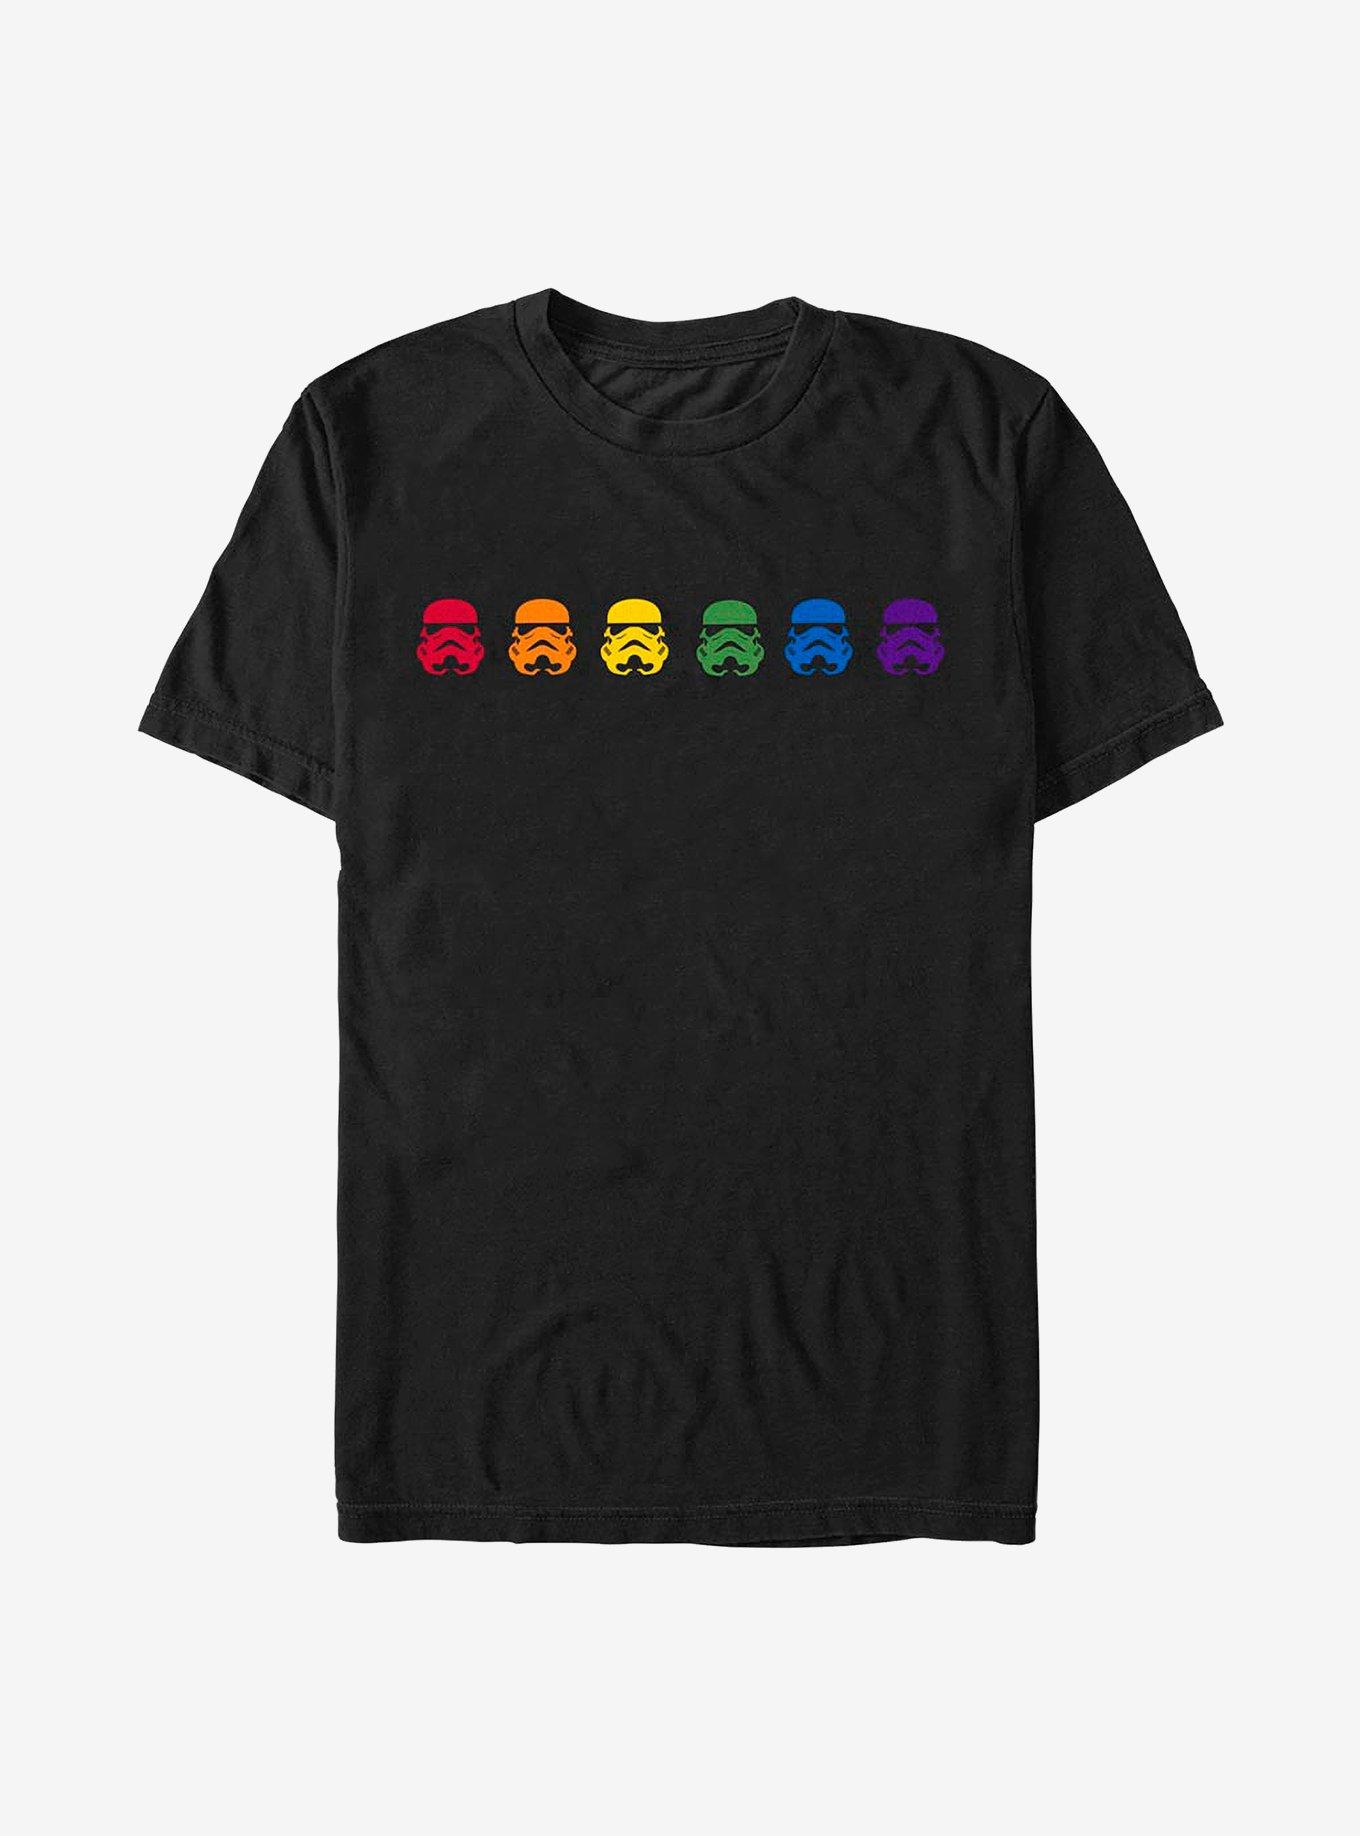 Star Wars Stormtrooper Rainbow Helmets T-Shirt